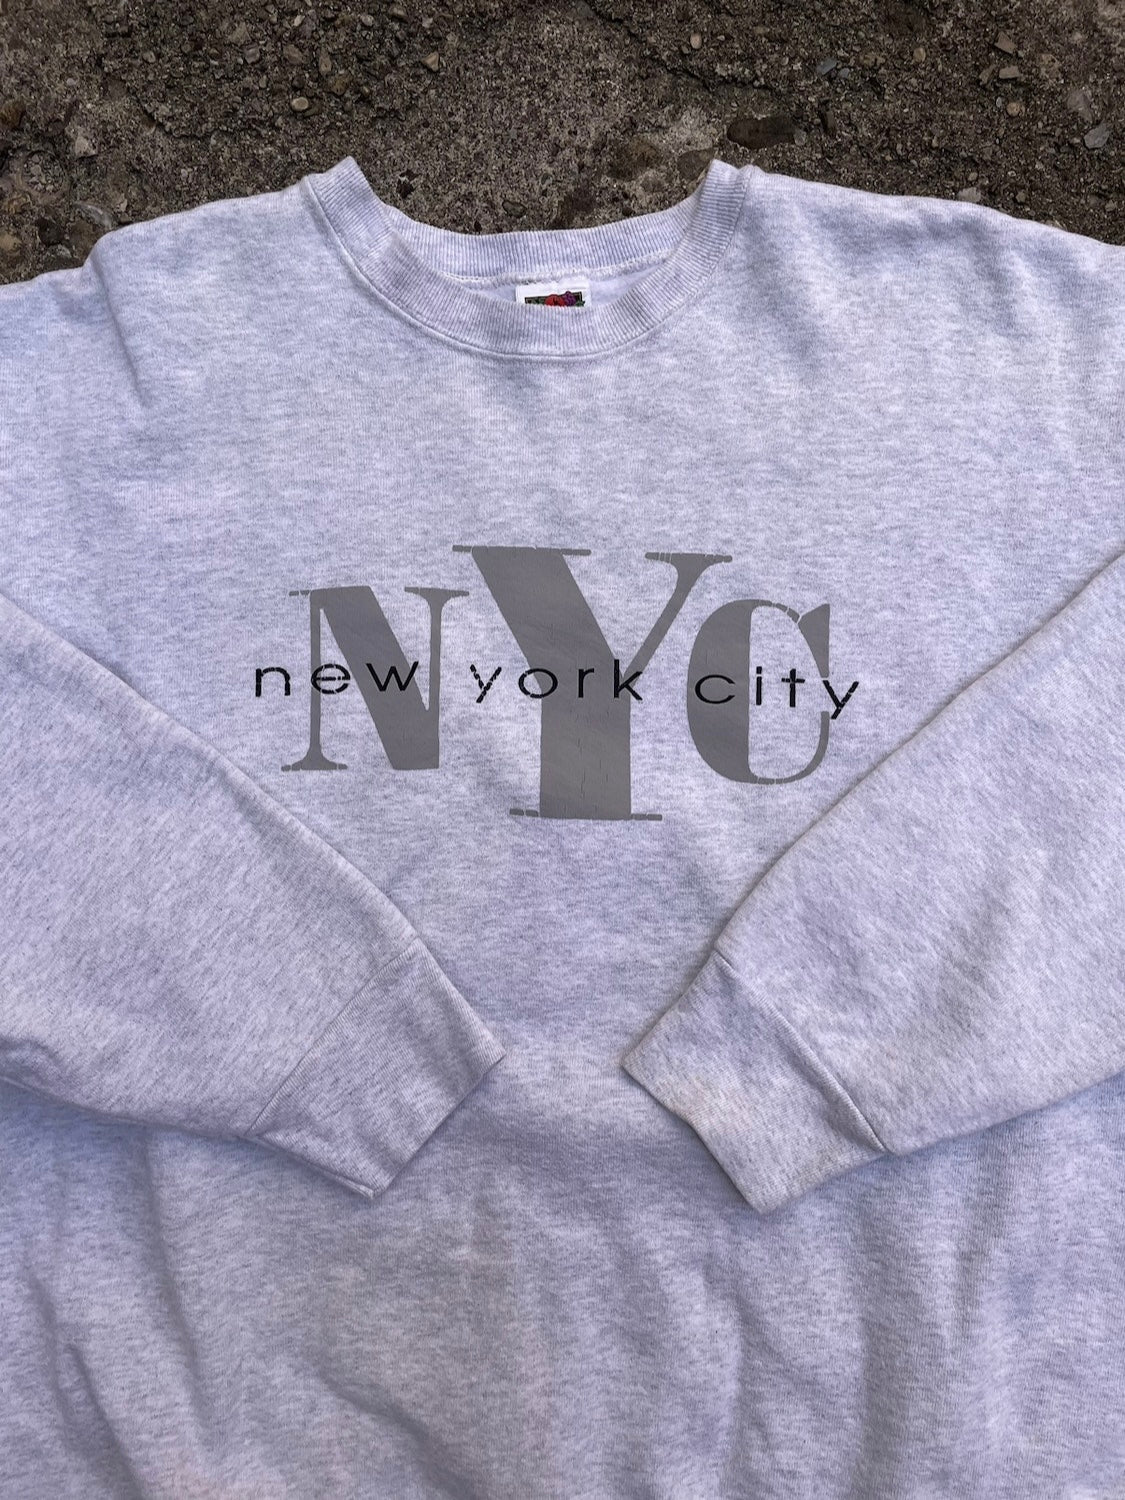 1990’s/2000’s New York City Crewneck - XL